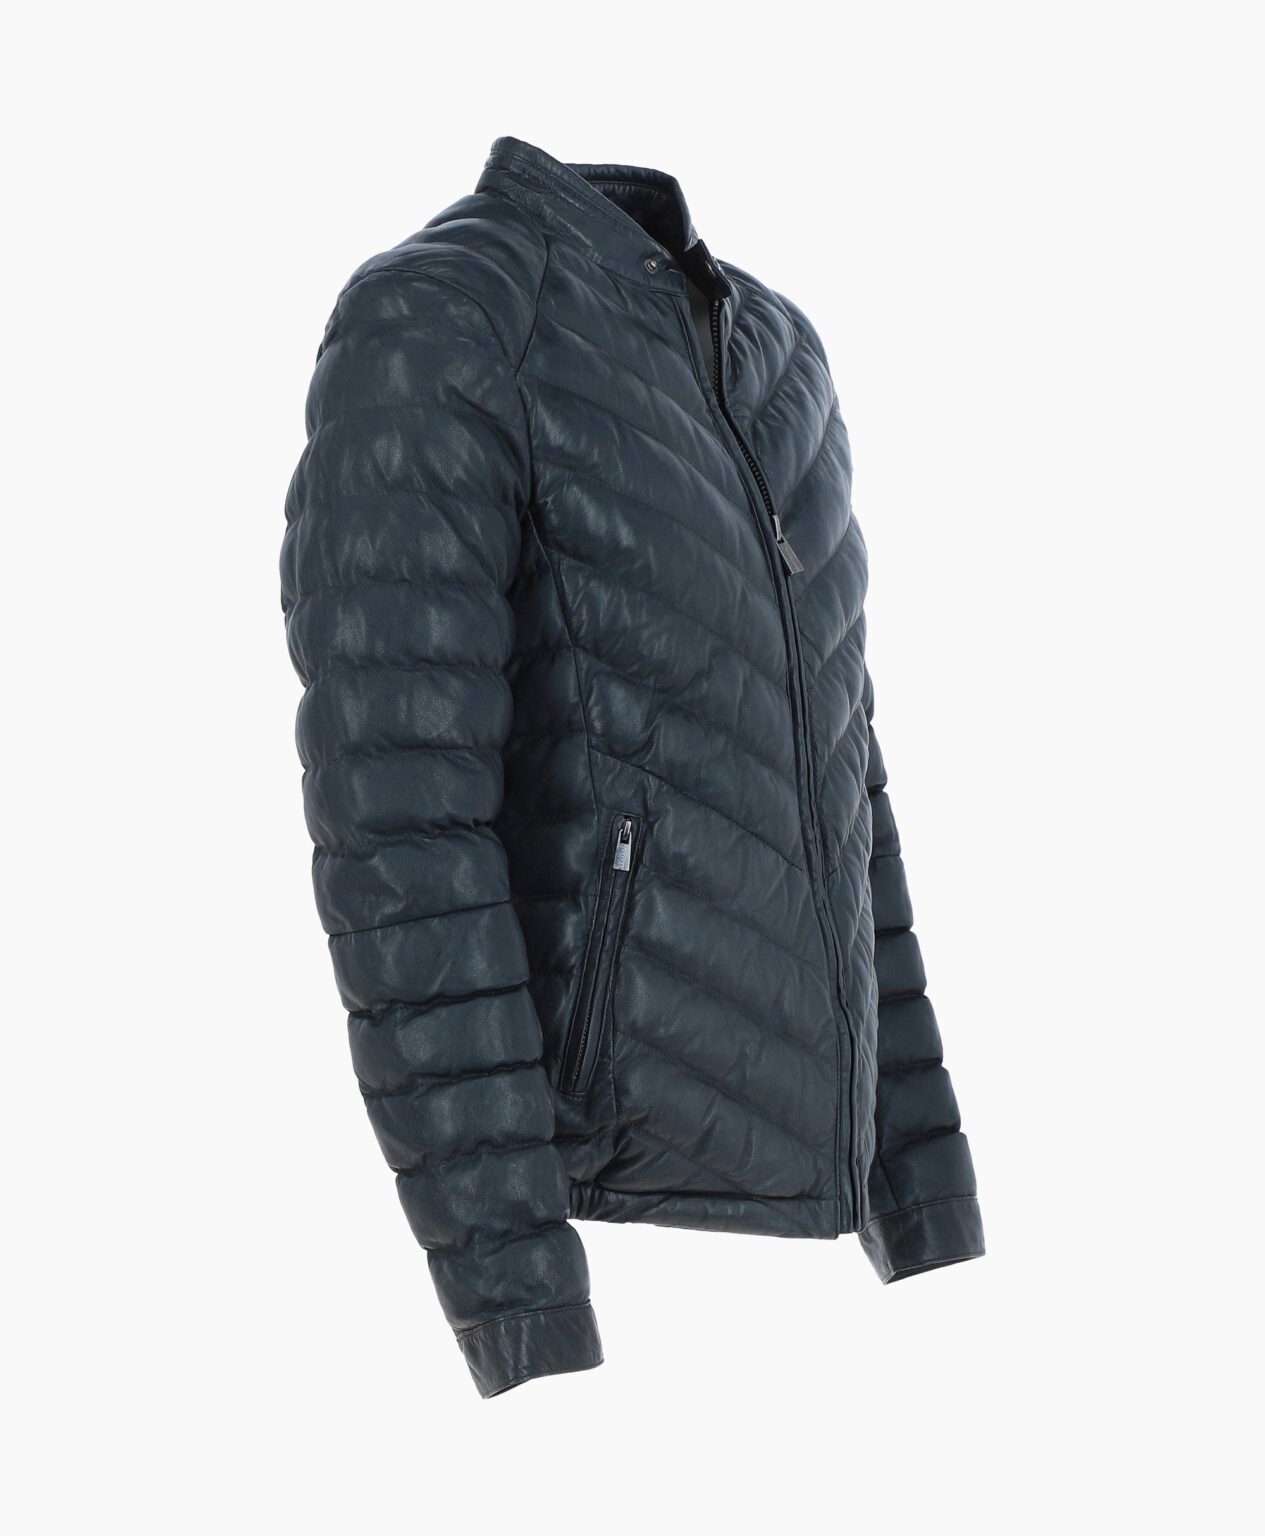 vogue-jacket-leather-puffer-jacket-navy-prescott-image203